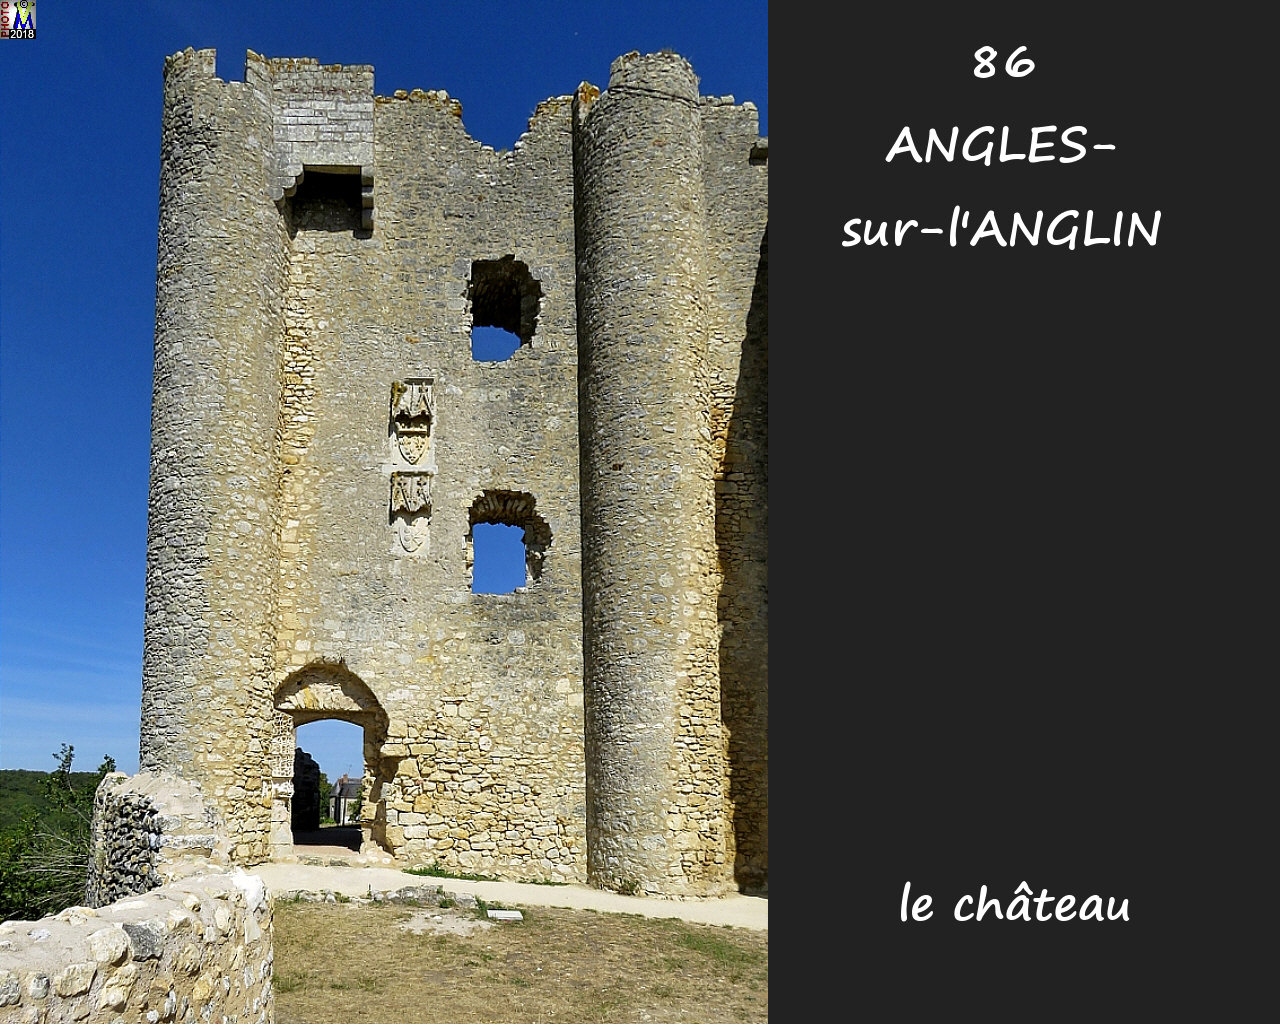 86ANGLES-S-ANGLIN_chateau_1124.jpg